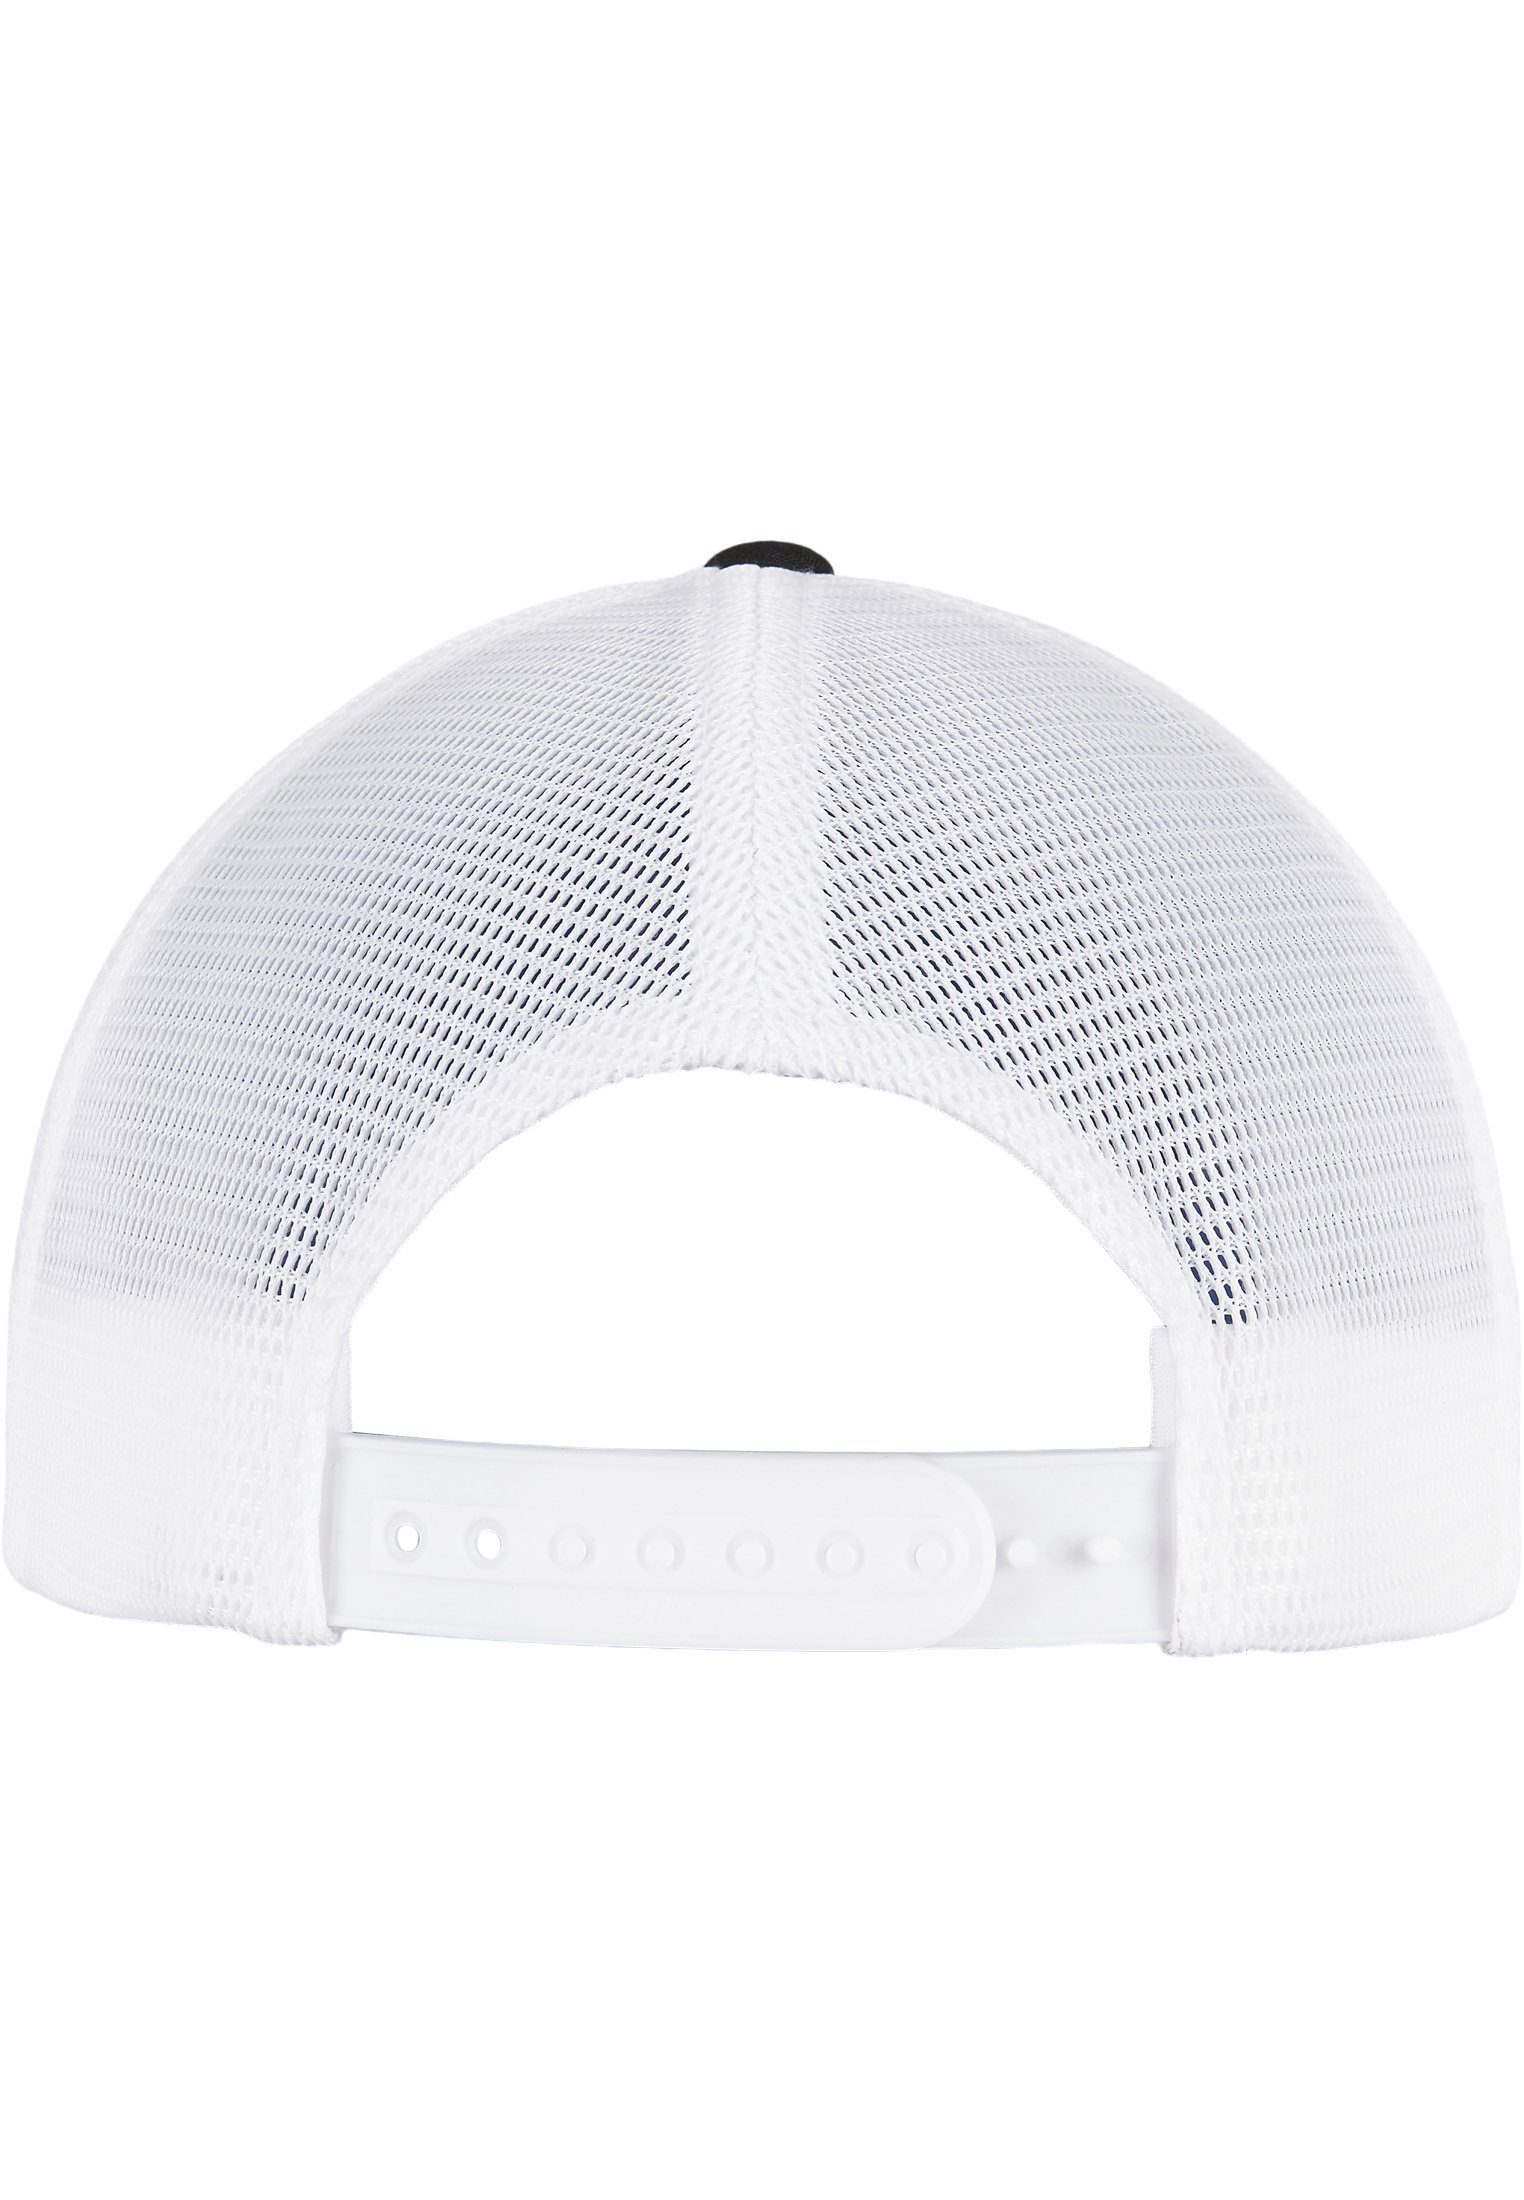 Flexfit 360° Cap 2-Tone black/white Cap Accessoires Omnimesh Flex